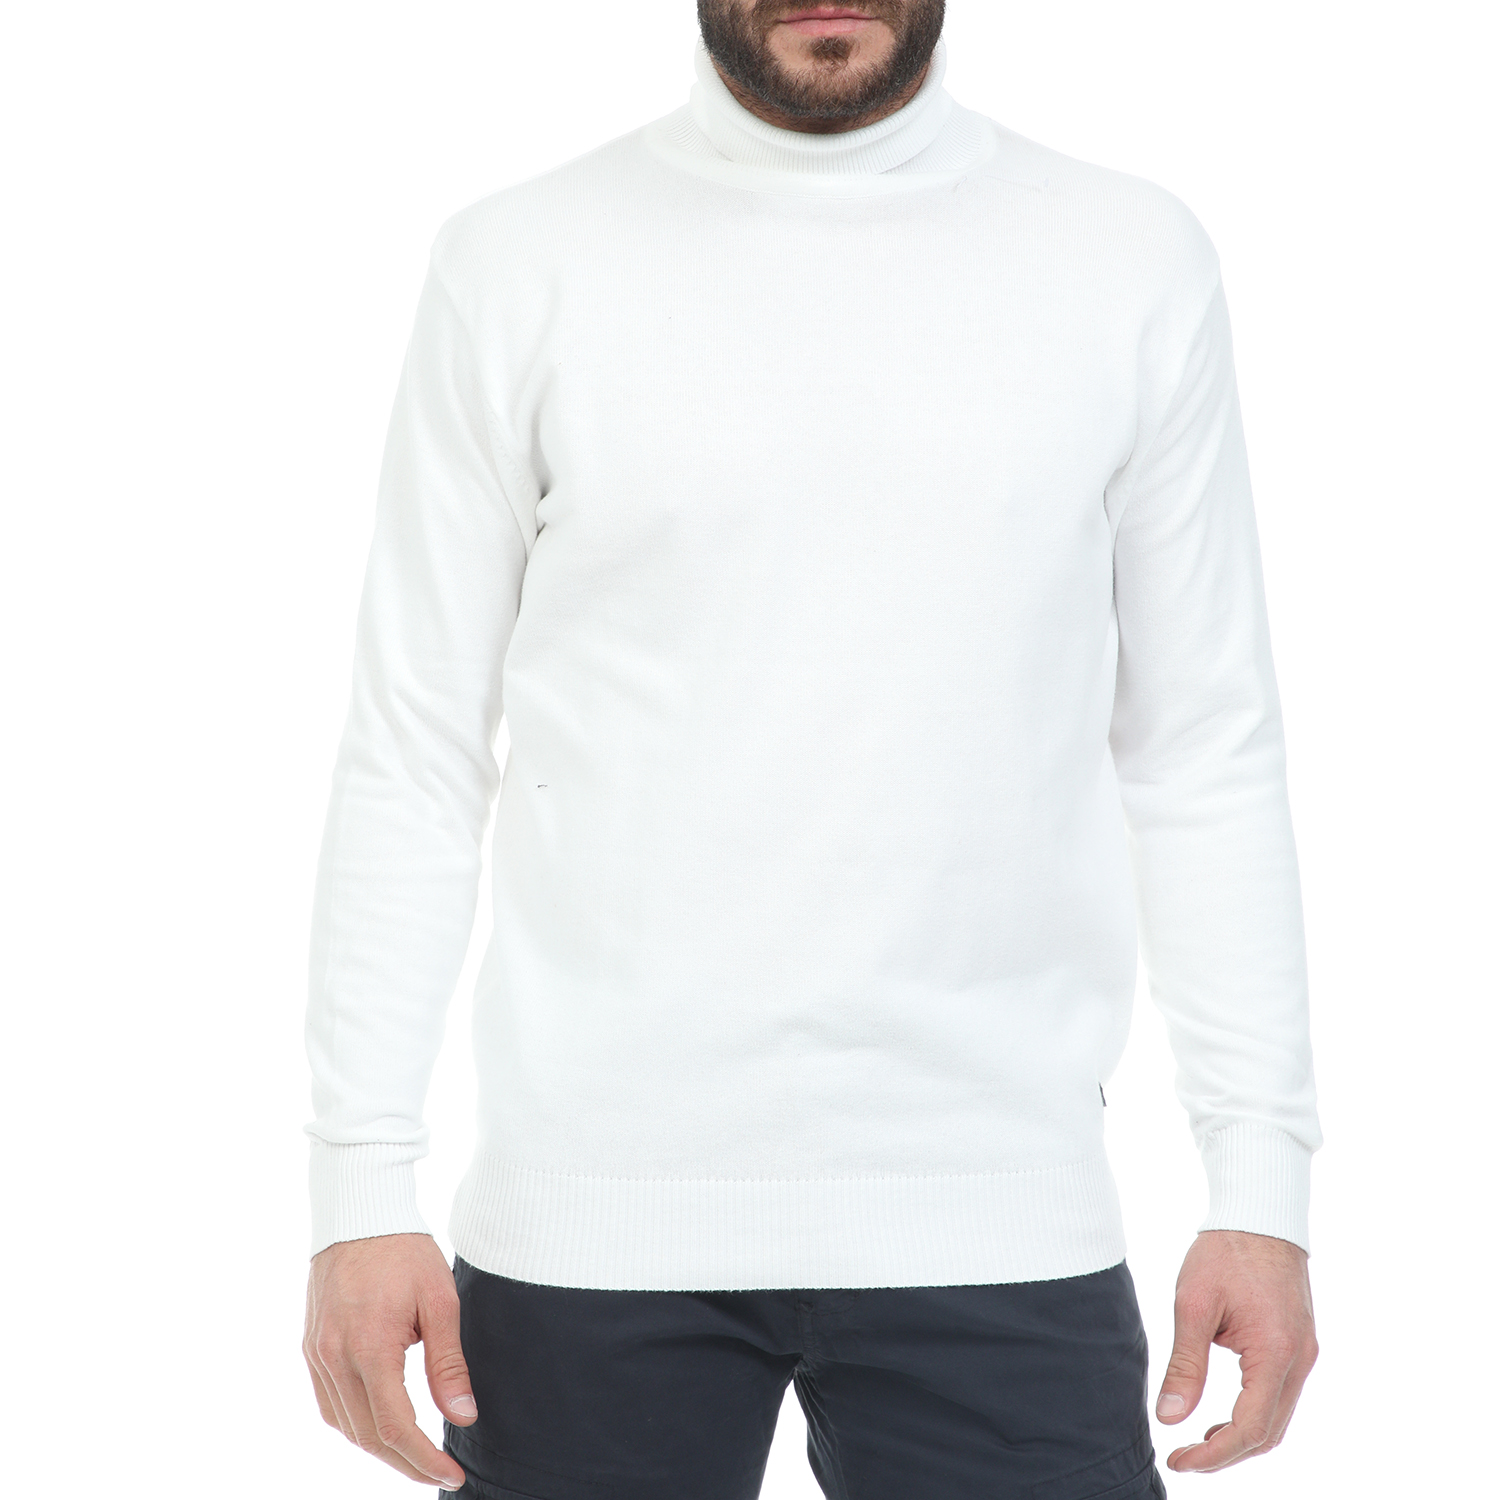 CATAMARAN SAILWEAR - Ανδρική πλεκτή μπλούζα ζιβάγκο CATAMARAN SAILWEAR λευκή